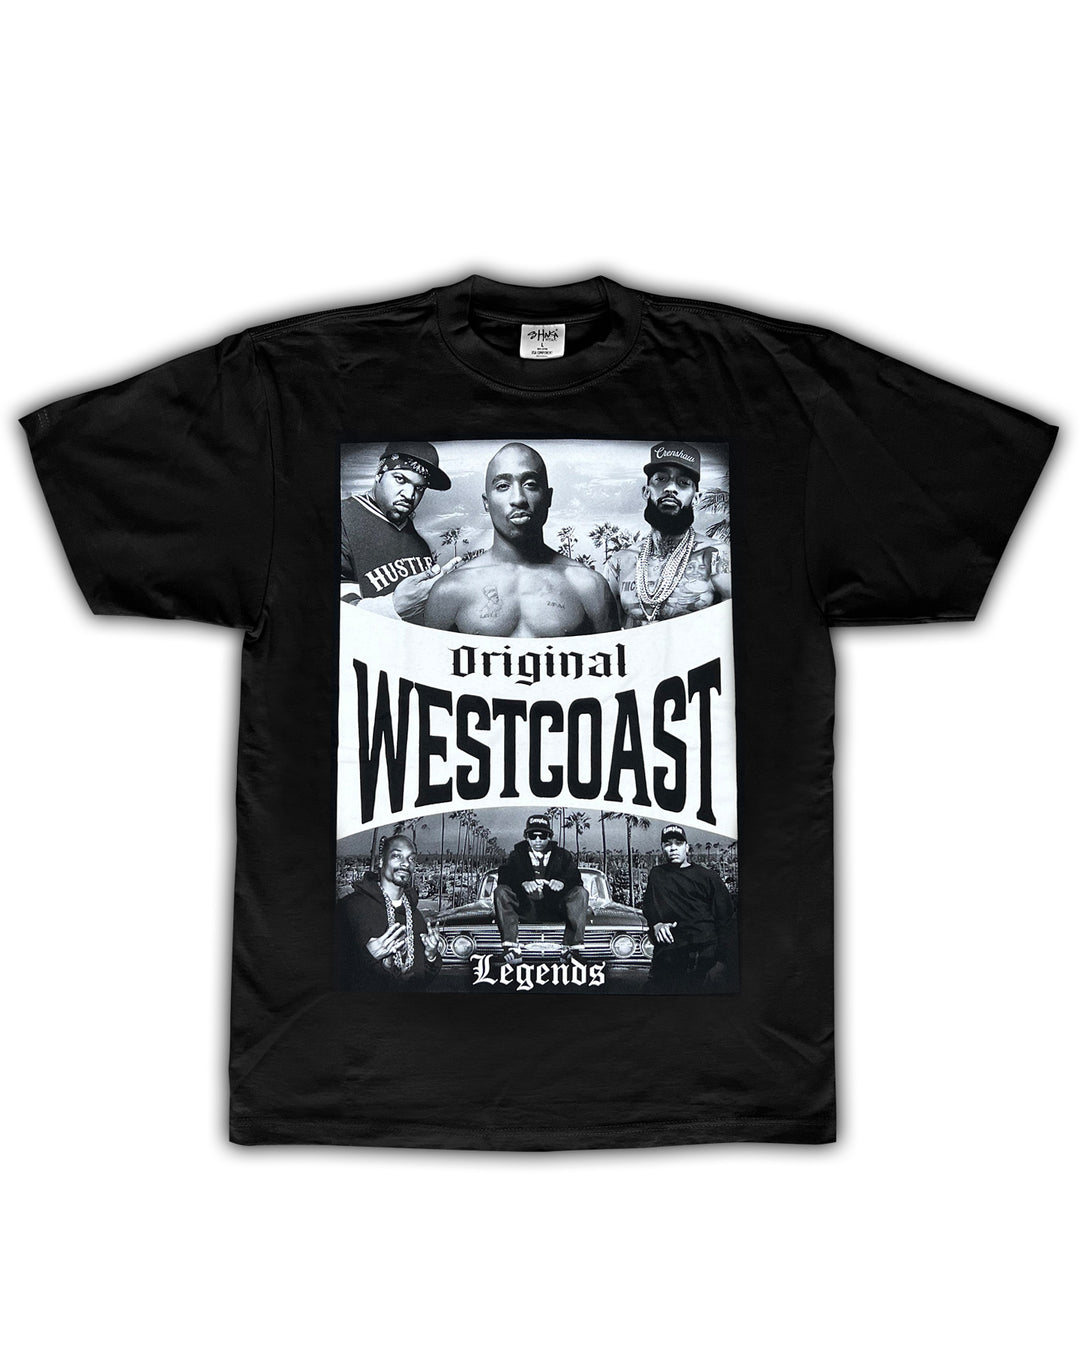 Original Westcoast